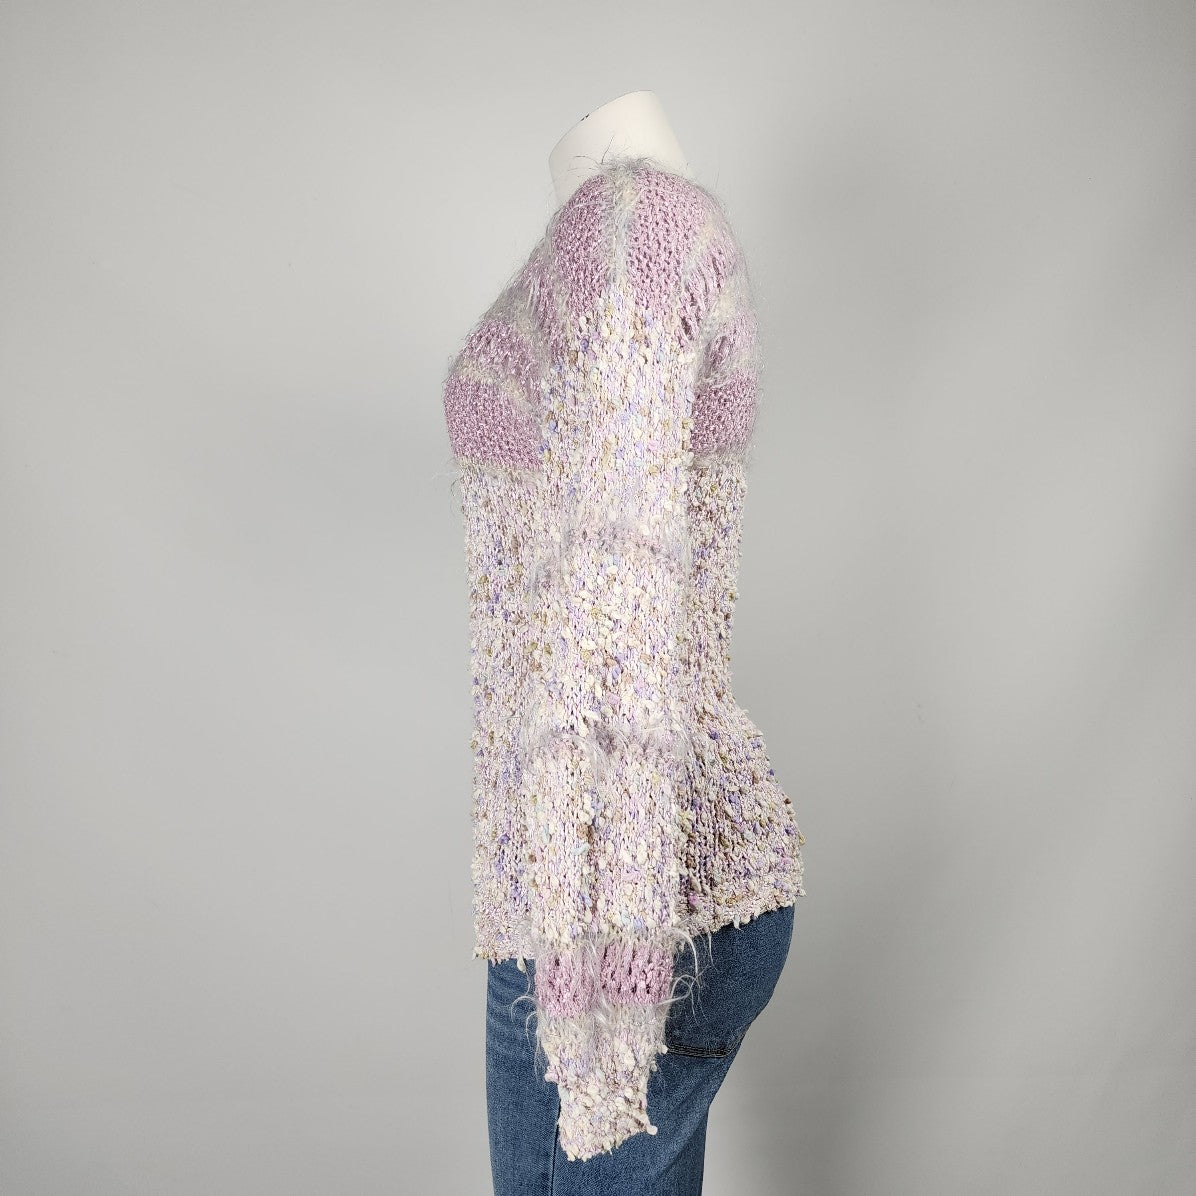 Vintage Handmade Purple Knit Sweater Size S